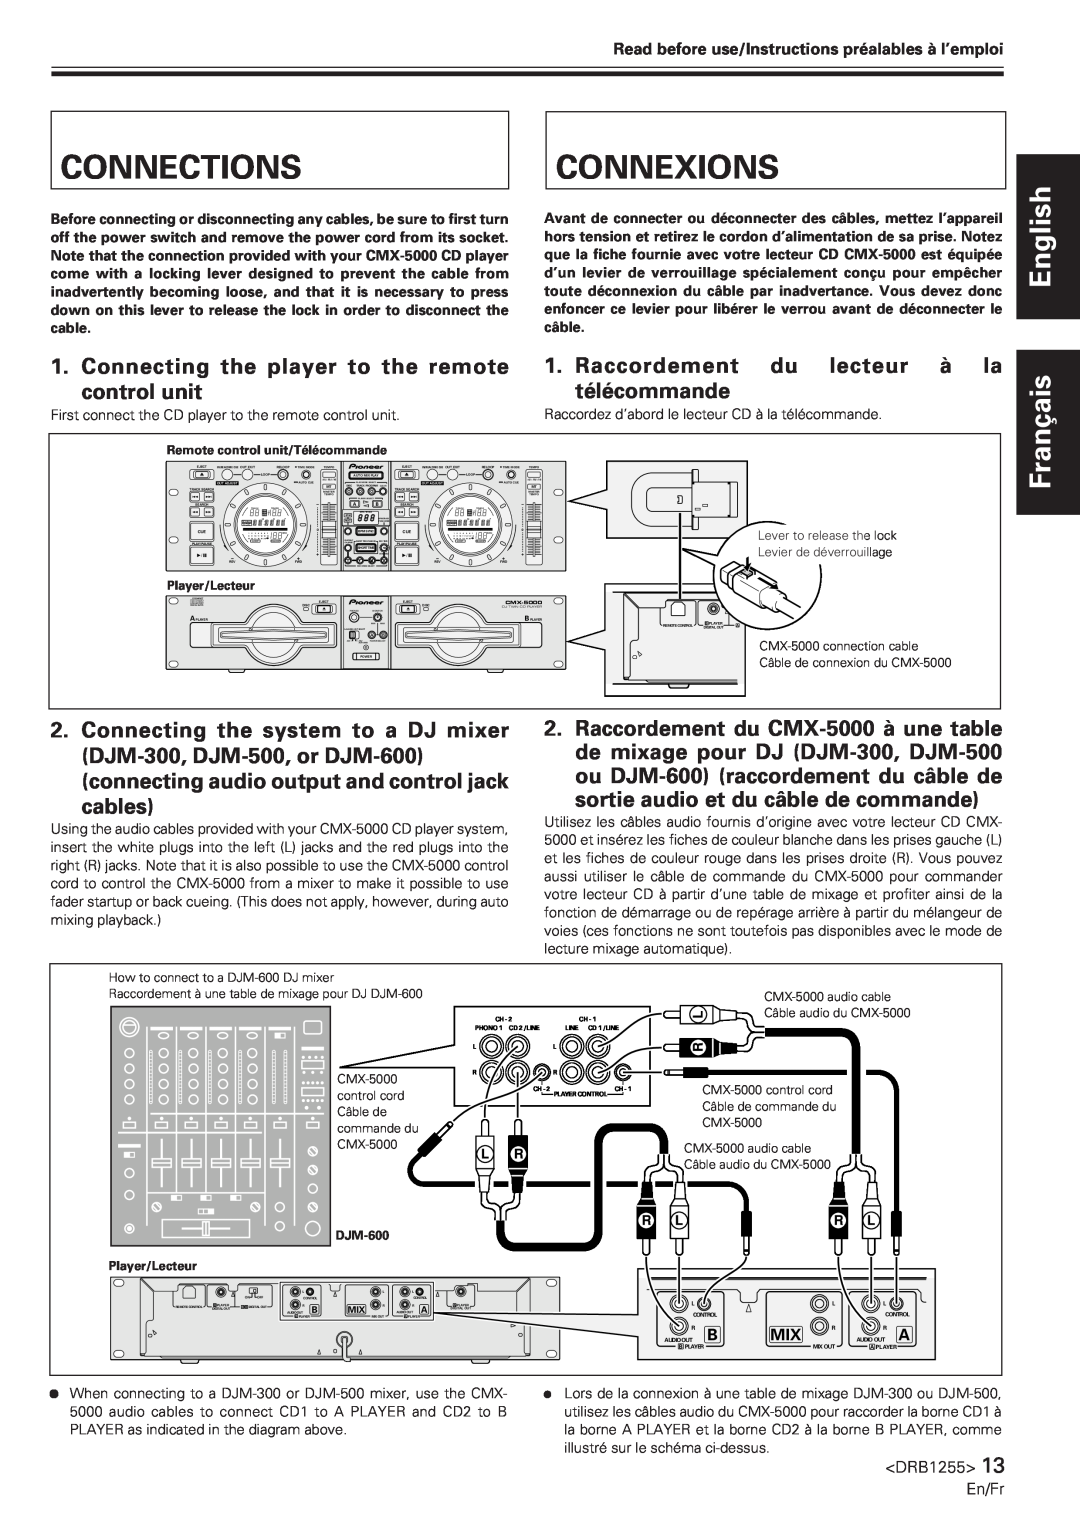 Pioneer CMX-5000 Connections, Connexions, Connecting the player to the remote, Raccordement du lecteur à la, control unit 